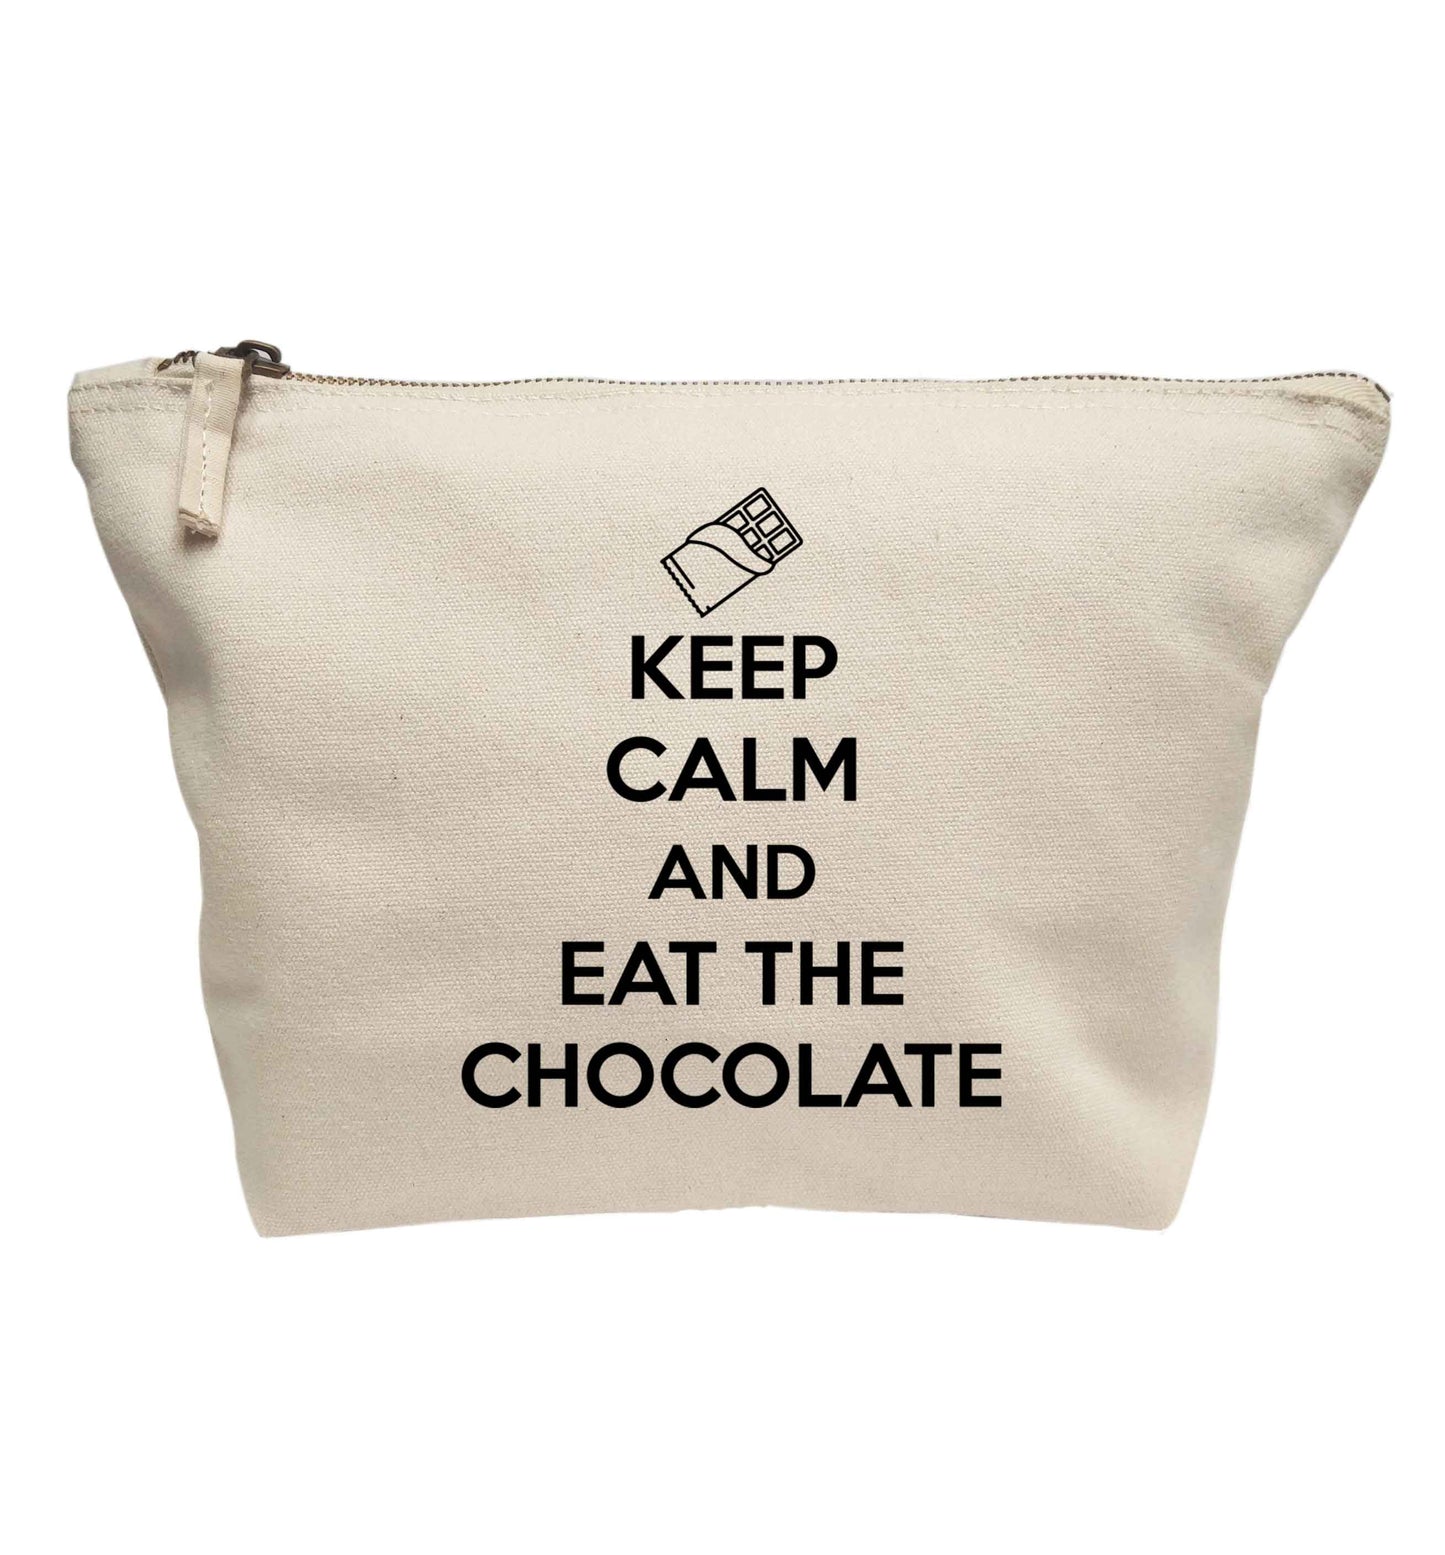 Keep calm and eat the chocolate | Makeup / wash bag